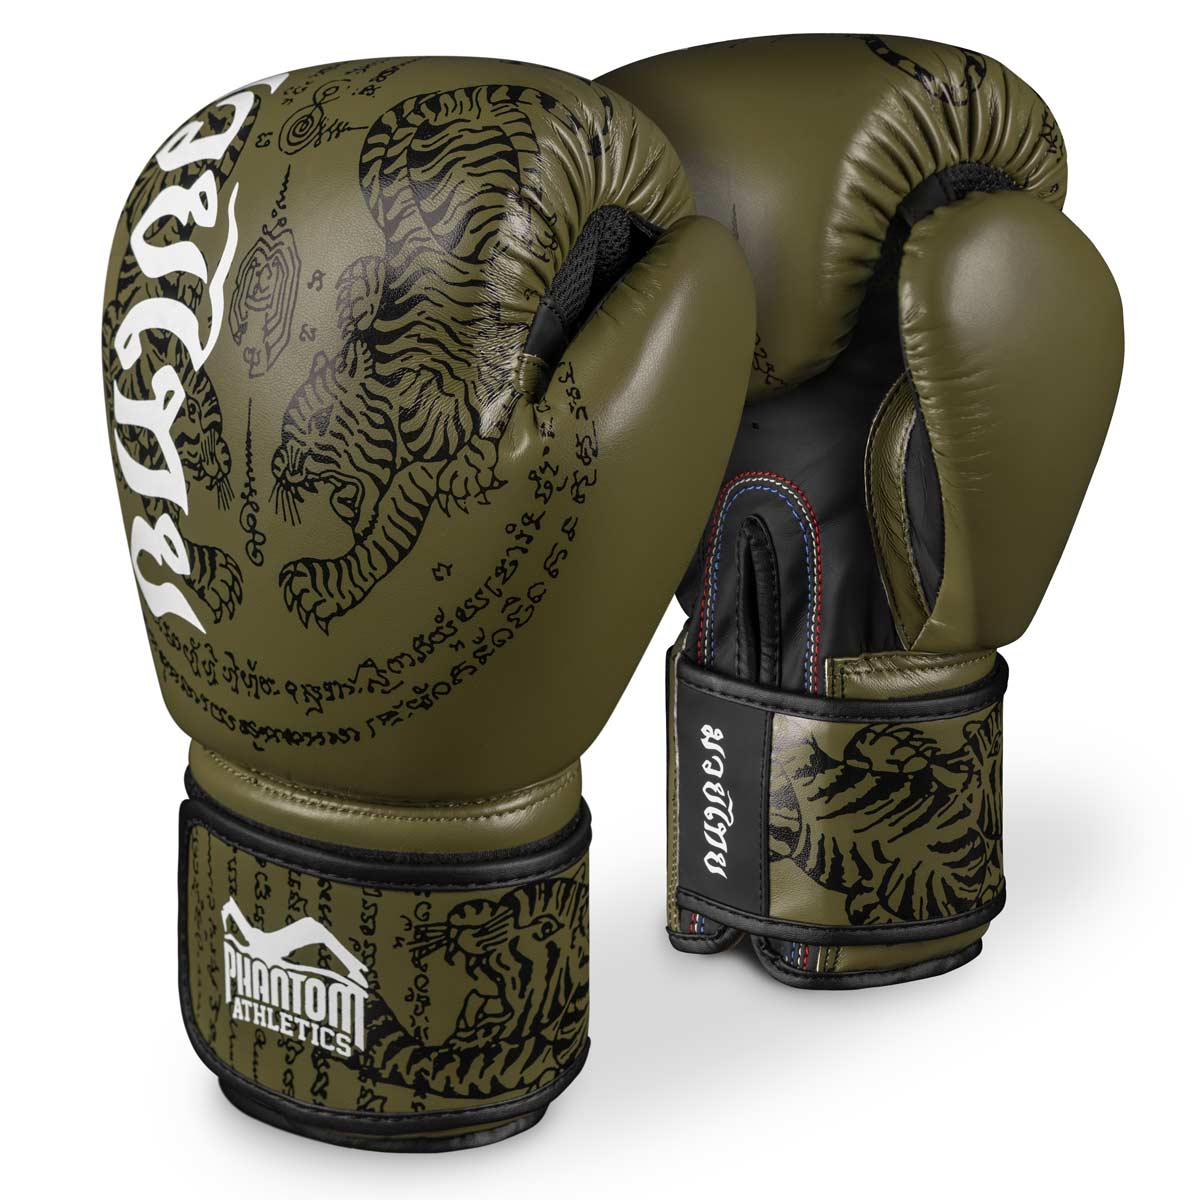 Phantom Muay Thai boxing gloves with Thai print in army green. Sak Yant Design.